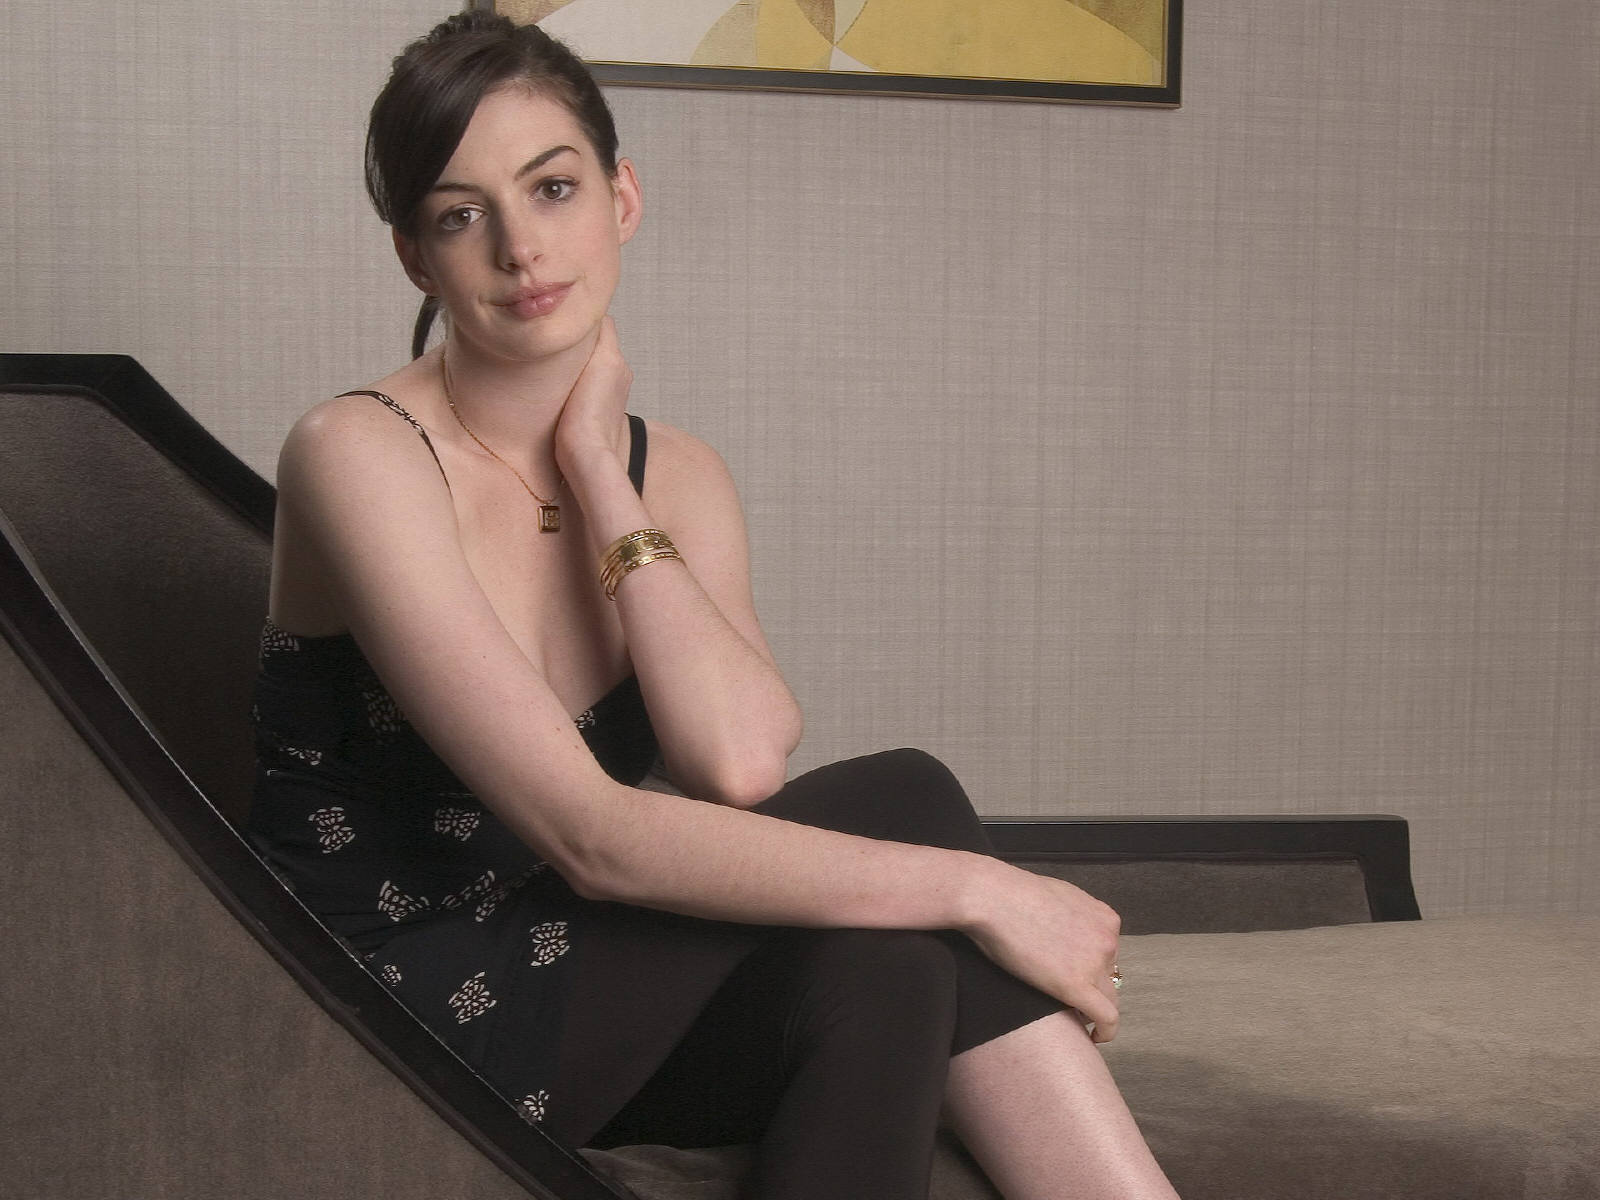 Download full size Anne Hathaway wallpaper / Celebrities Female / 1600x1200